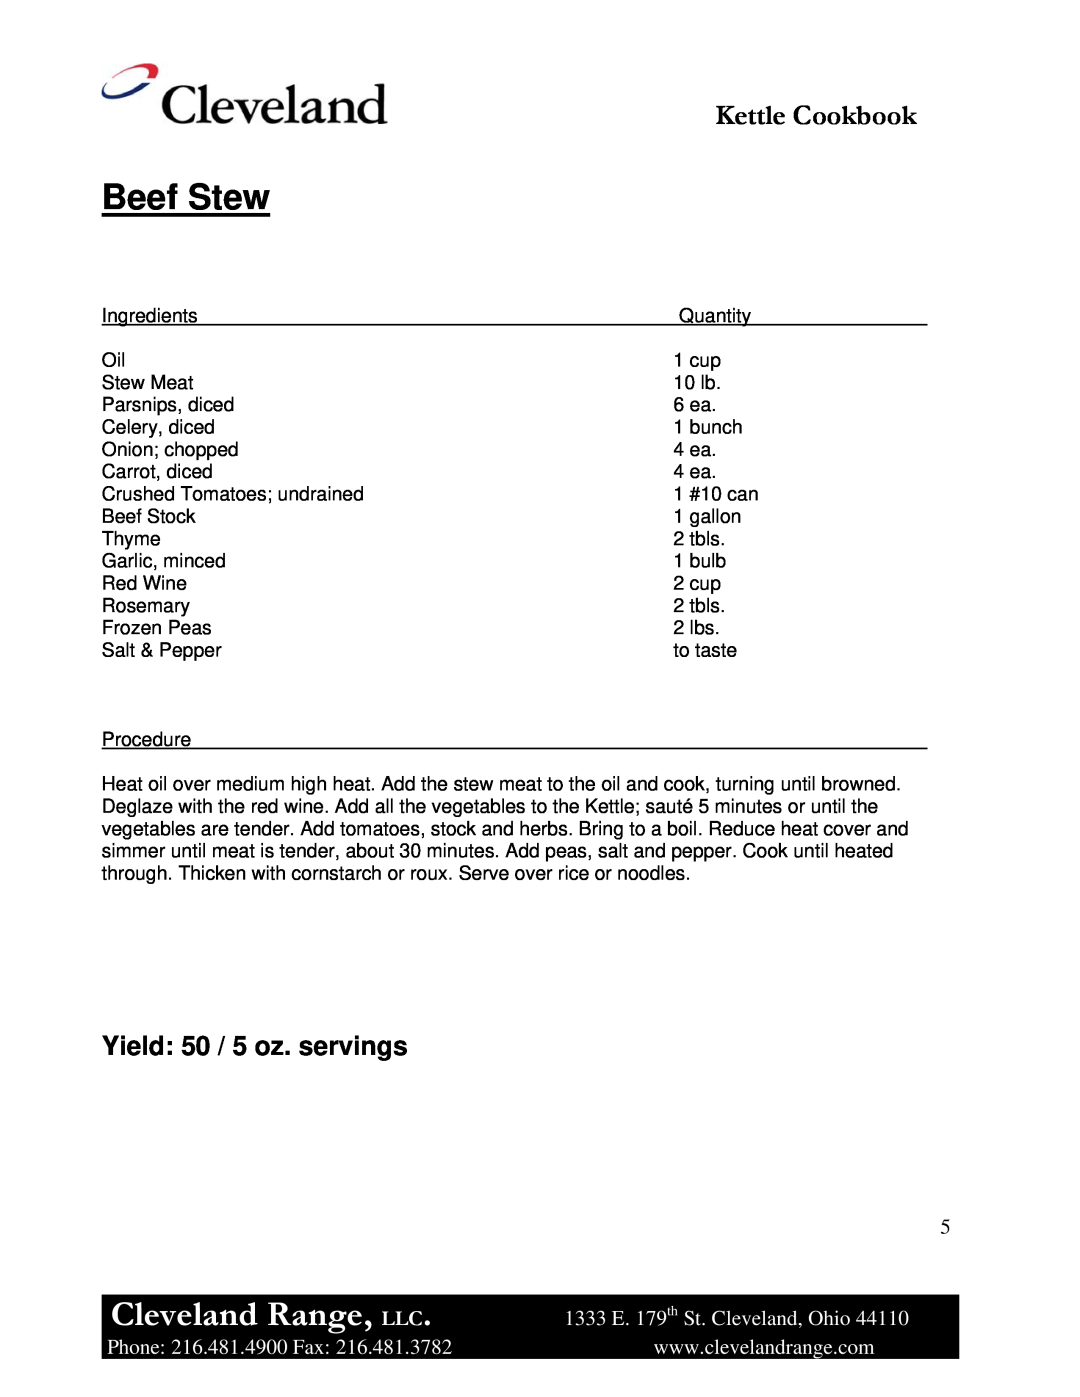 Cleveland Range Steam Jacketed Kettle manual Beef Stew, Yield 50 / 5 oz. servings, Cleveland Range, LLC, Kettle Cookbook 